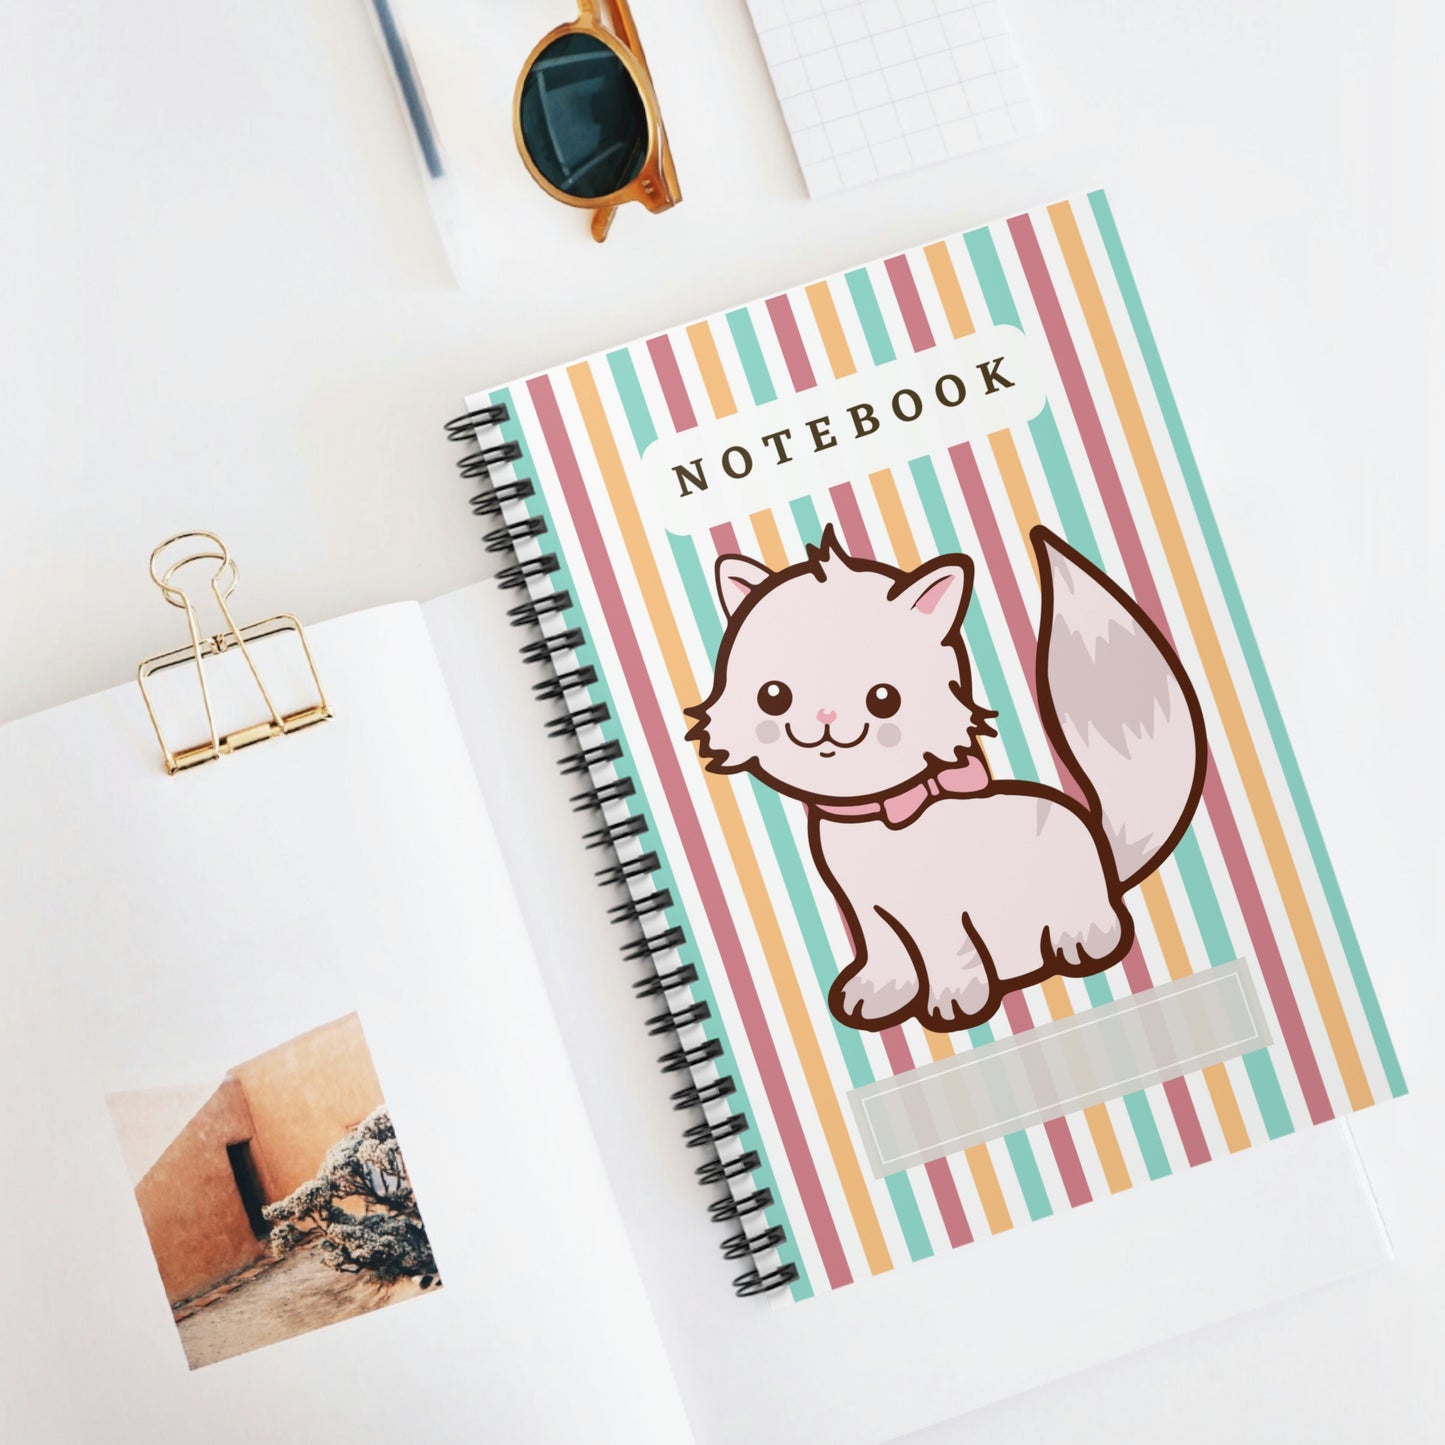 Big Kitten/Cat Stripe design Spiral Notebook - Ruled Line 118 pages